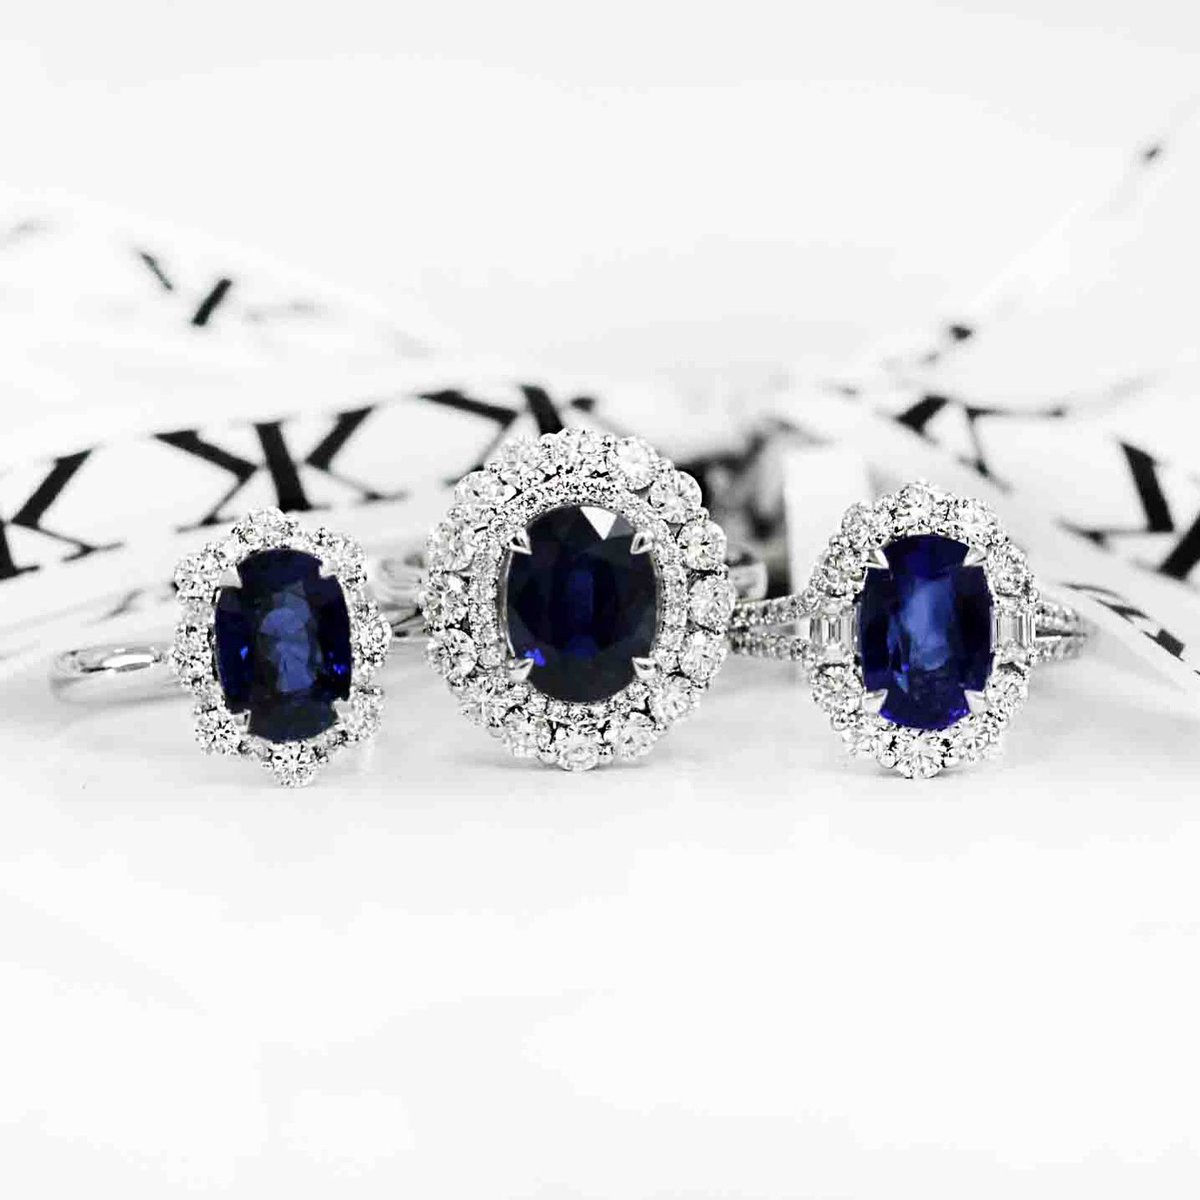 Sapphires are sensational as spectacular as your romance...#royalbluesapphire 
#bykalfinjewellery #diamondrings #custommadejewellery #engagementrings #diamondjewellery #weddingrings #bestjeweller #jewellers #bluesapphires #melbournejeweller #melbourne kalfin.com.au